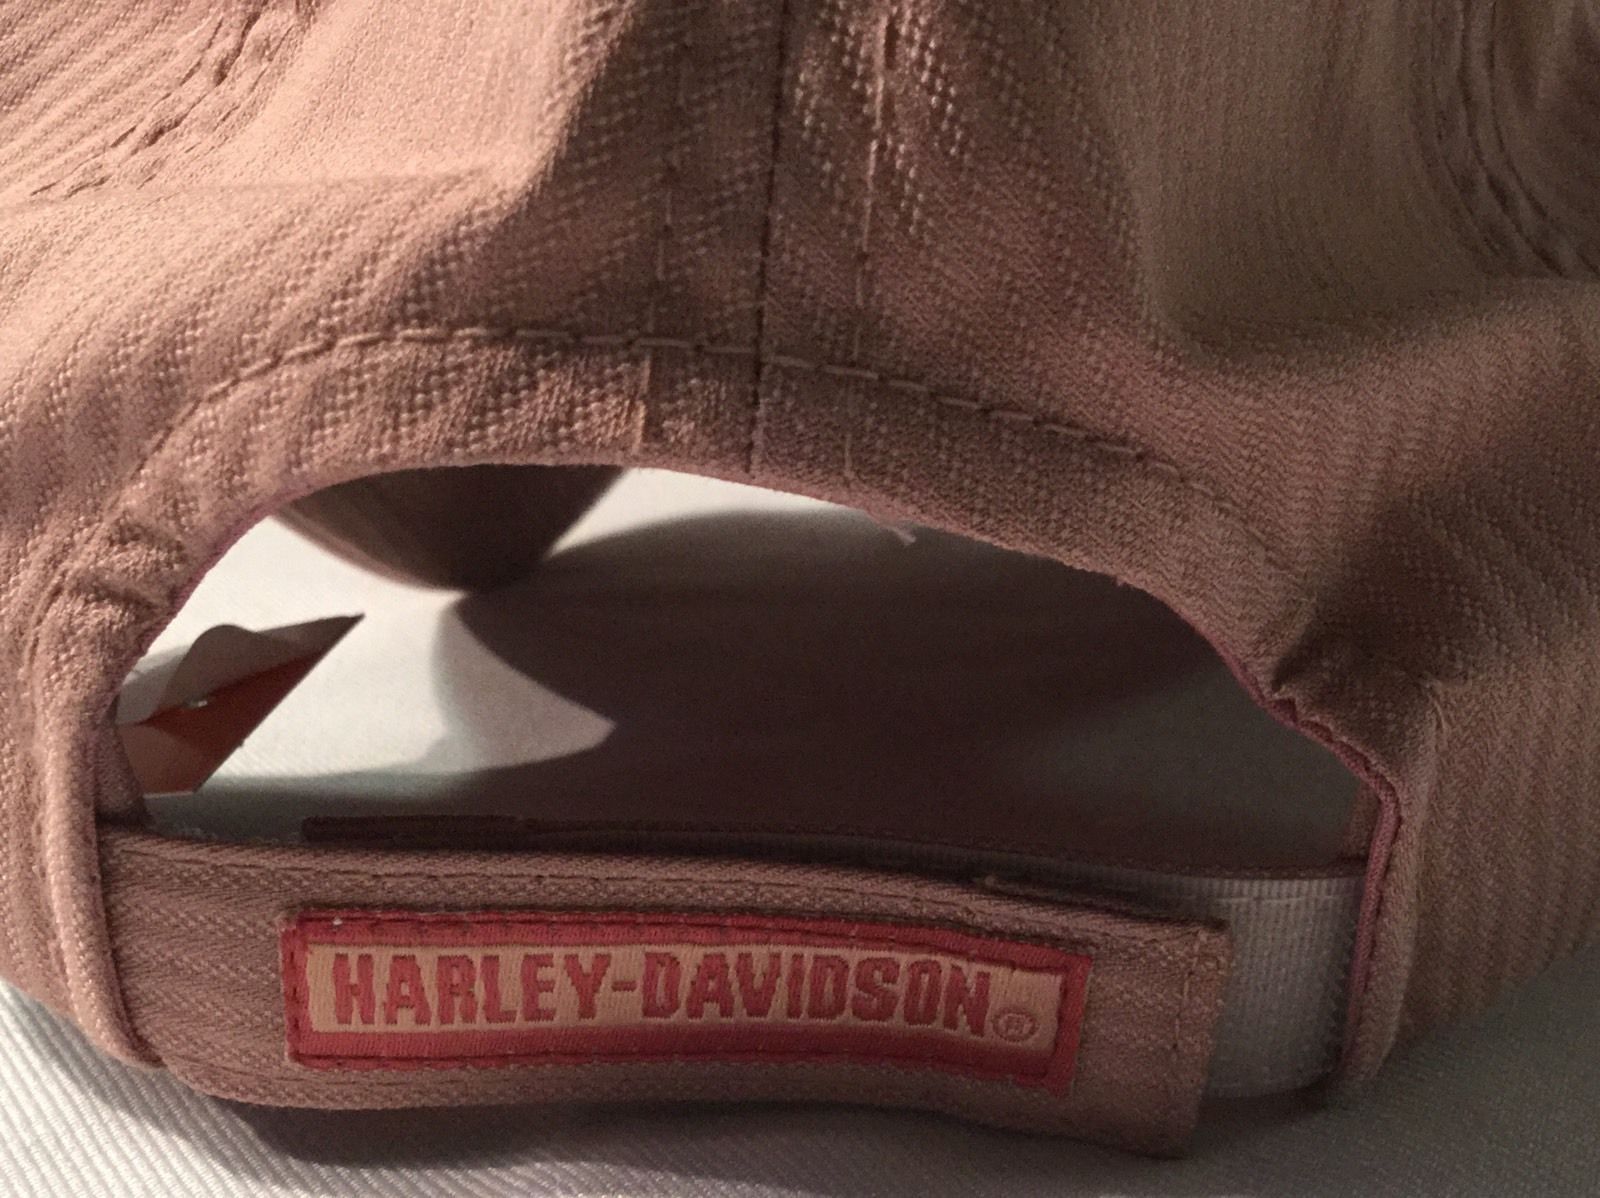 Harley Davidson Women S Baseball Cap Nwt And 50 Similar Items